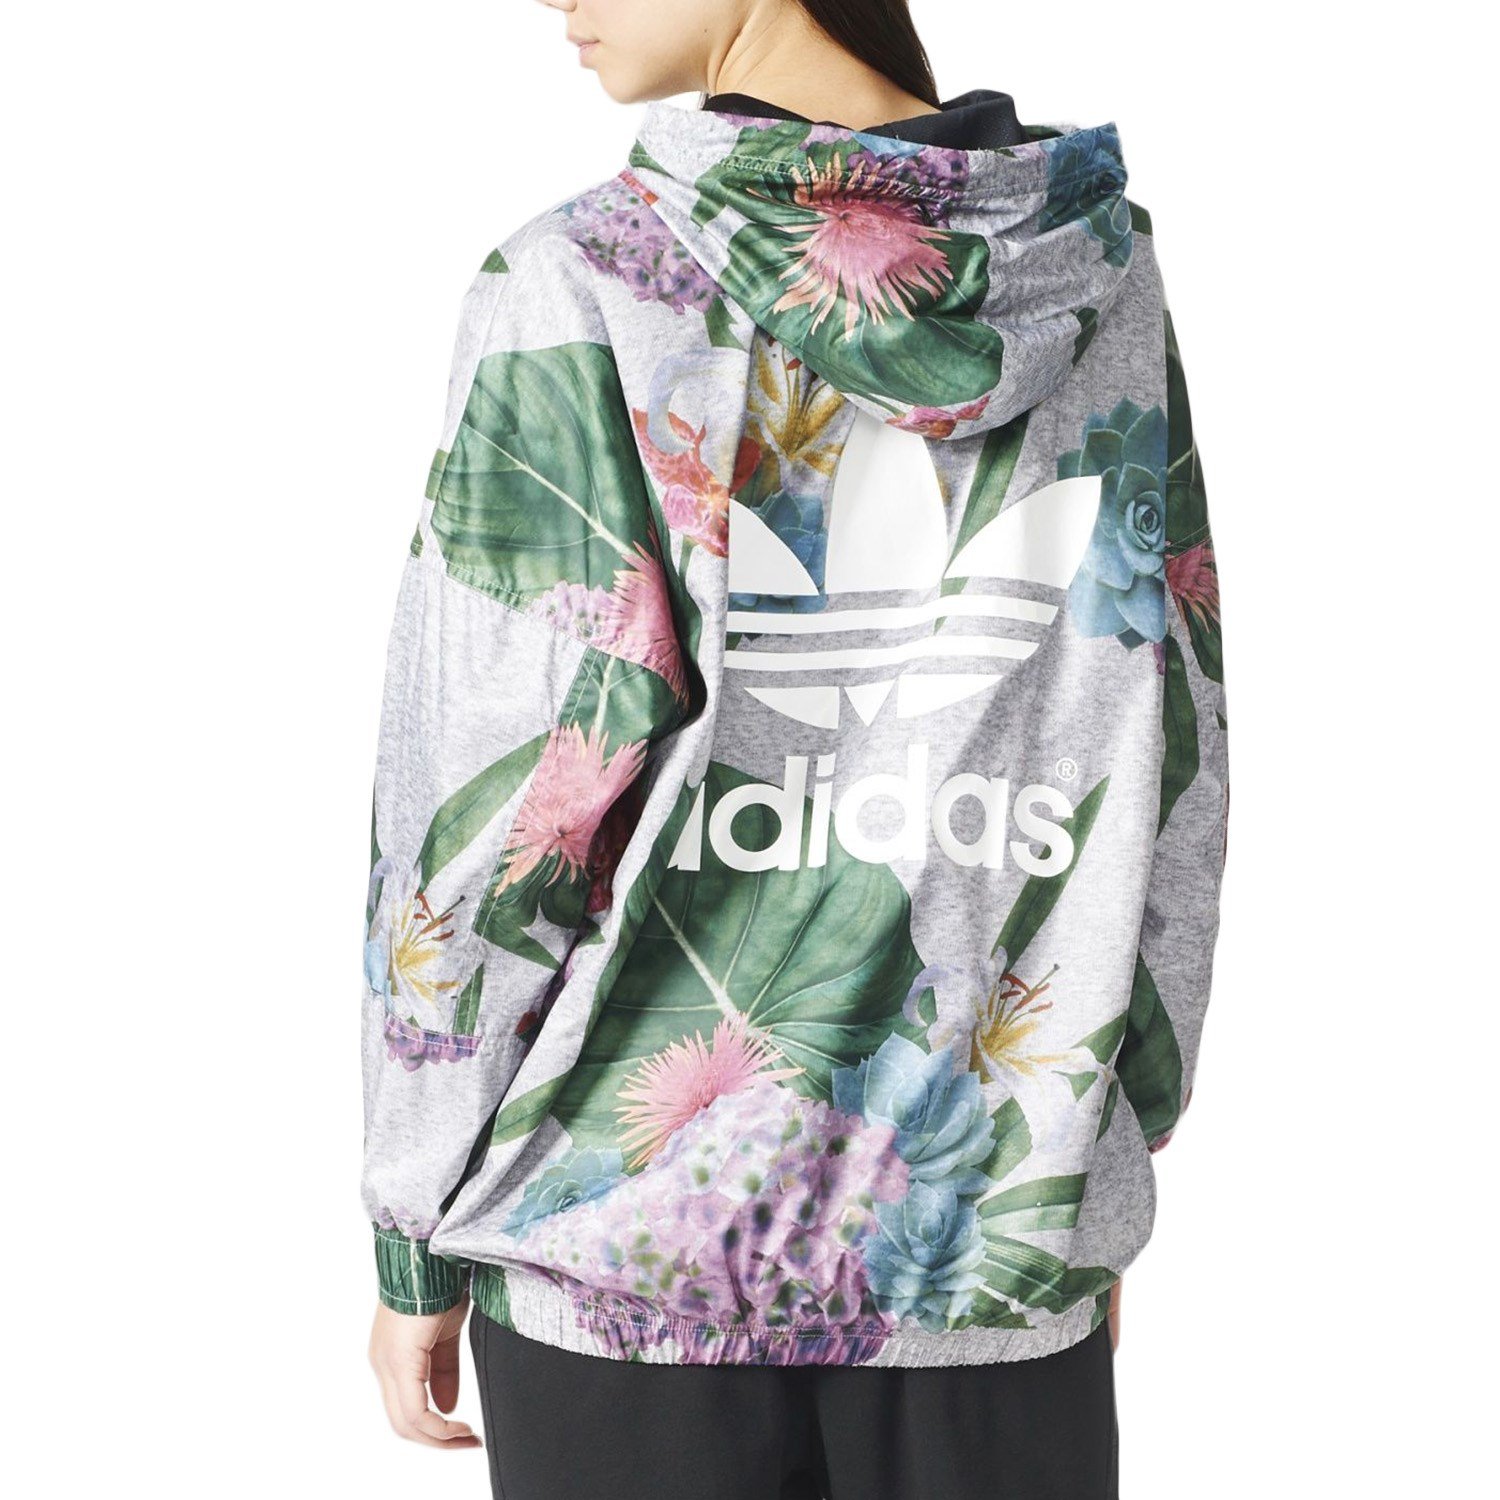 adidas jacket women floral